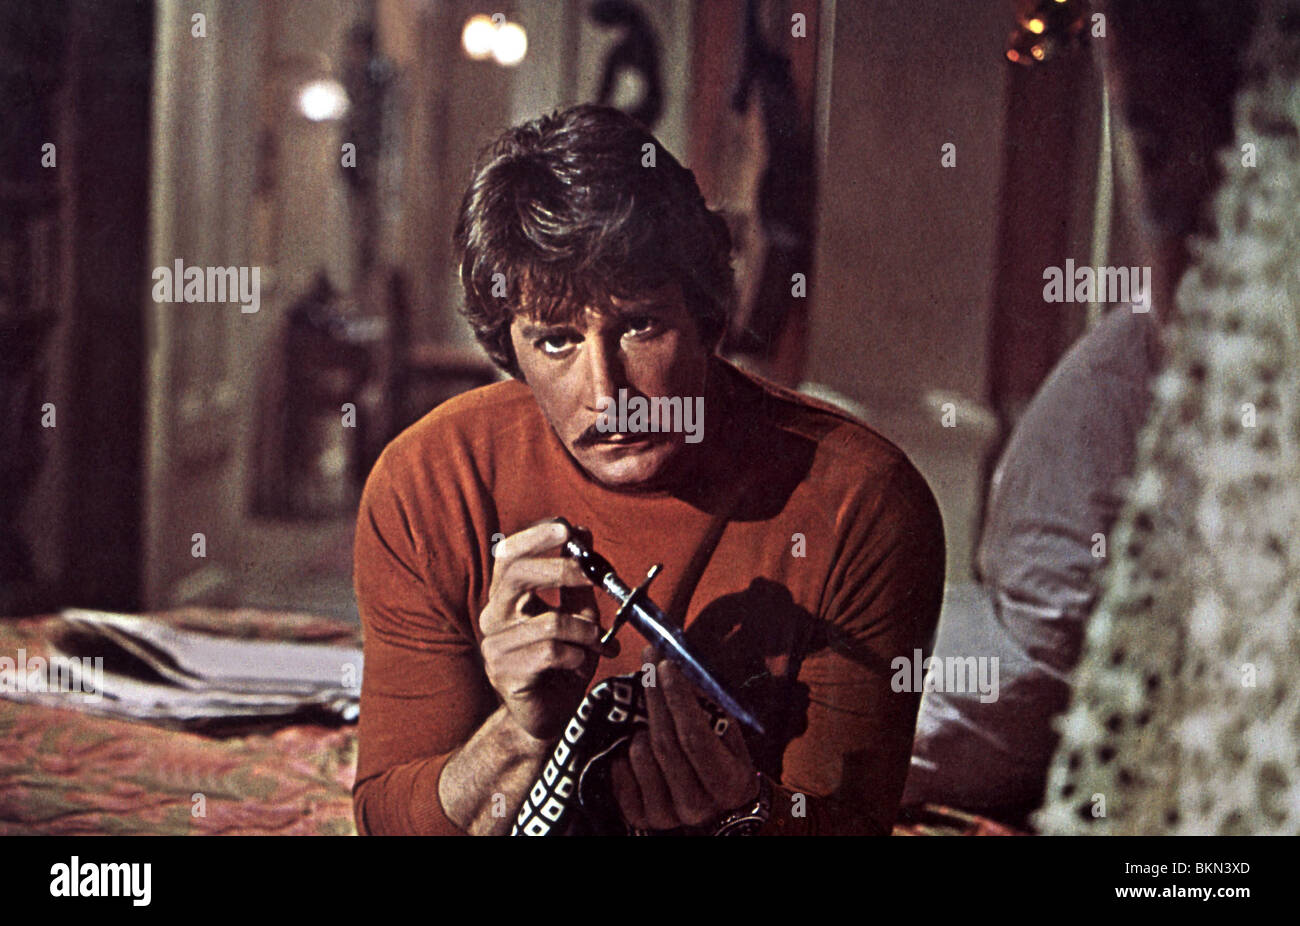 STILETTO-1969 ALEX CORD Stockfoto